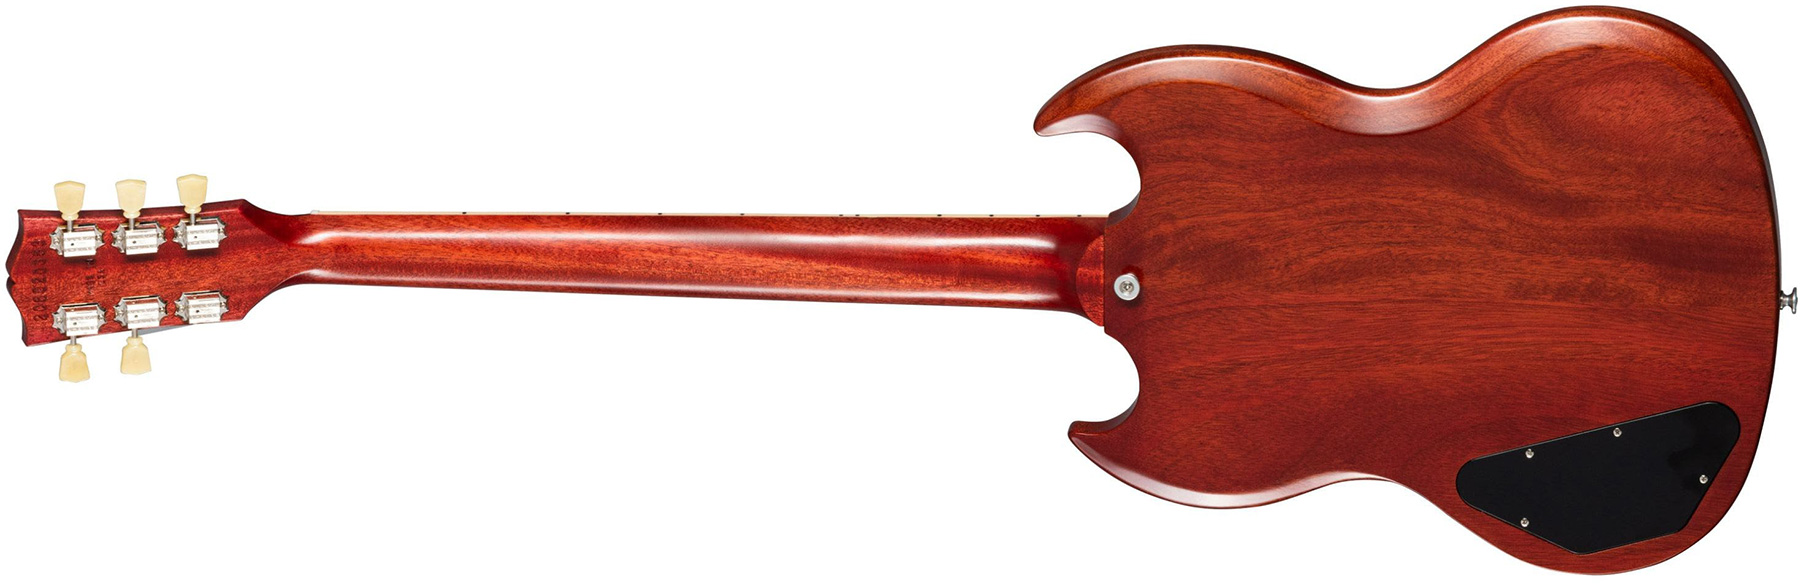 Gibson Sg Standard 1961 Faded Maestro Vibrola Original 2h Trem Rw - Vintage Cherry - Double Cut E-Gitarre - Variation 1